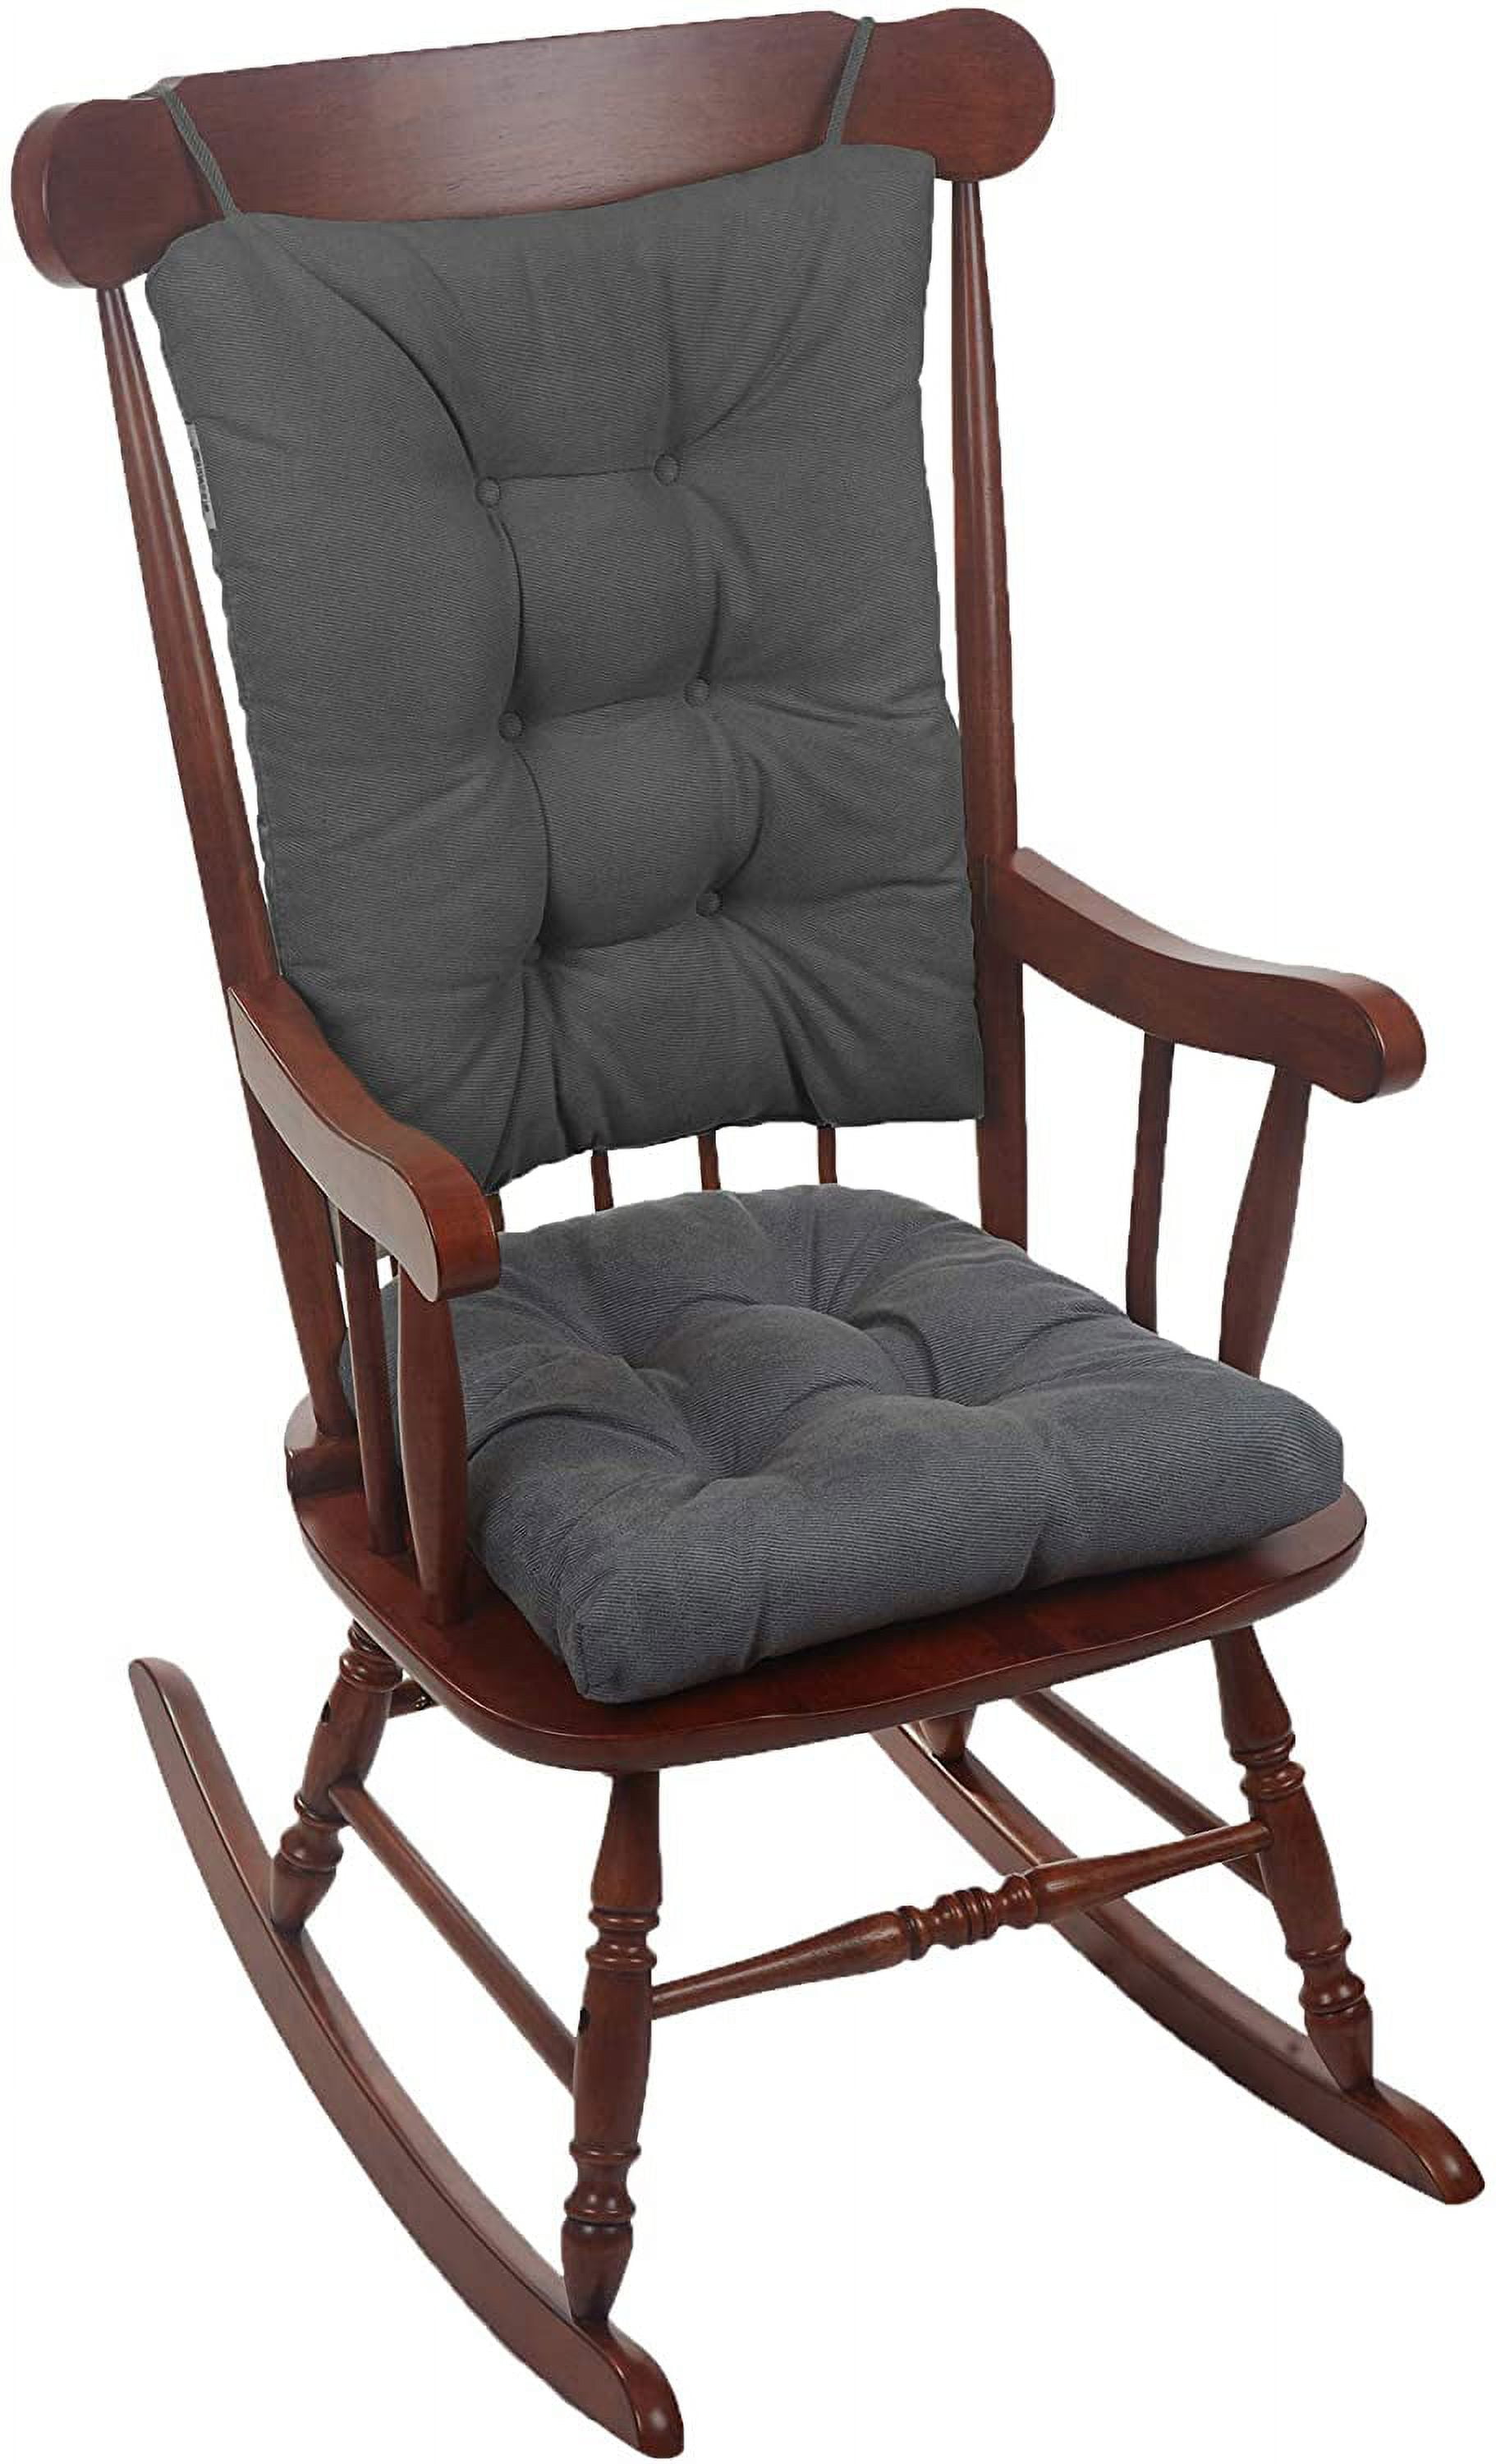 Gripper 17 x 17 Non-Slip Twillo Tufted Universal Chair Cushions Set of 2  - Bluestone